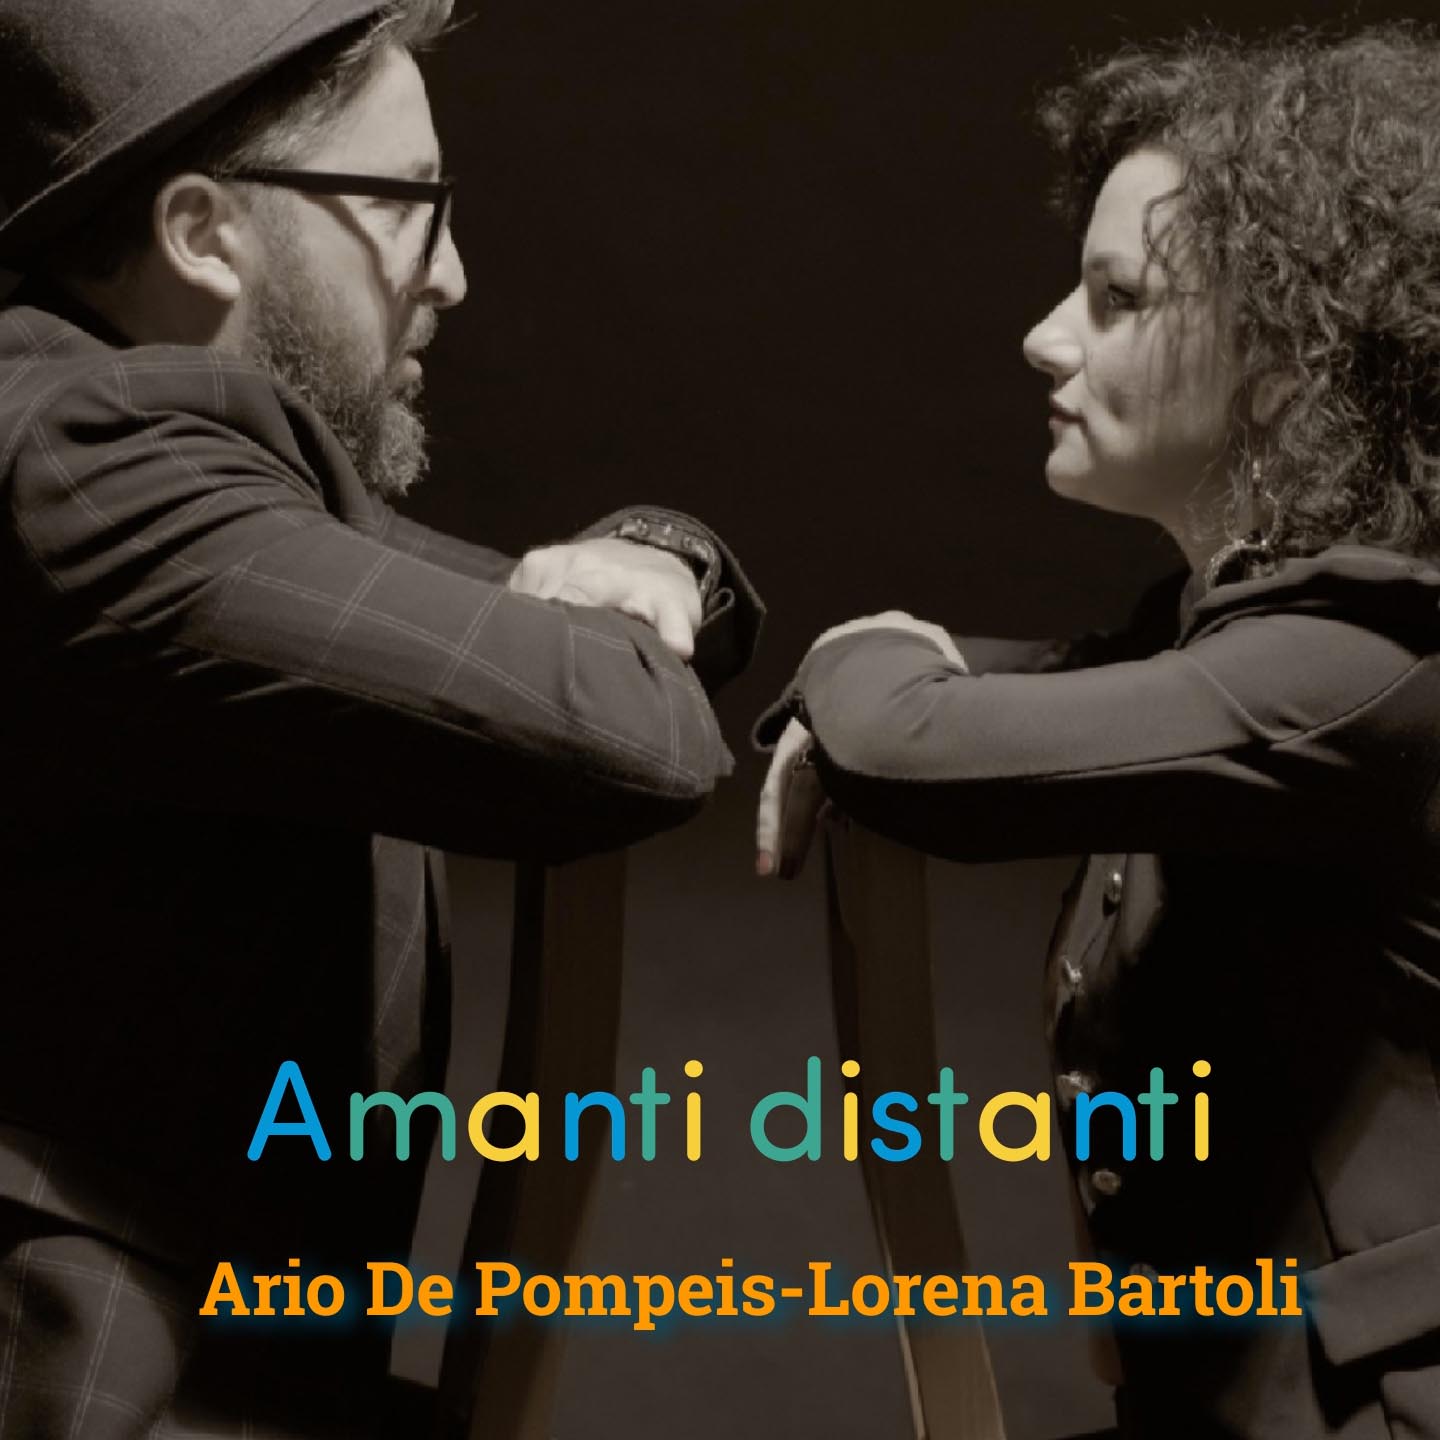 Ario De Pompeis e Lorena Bartoli in “Amanti distanti”